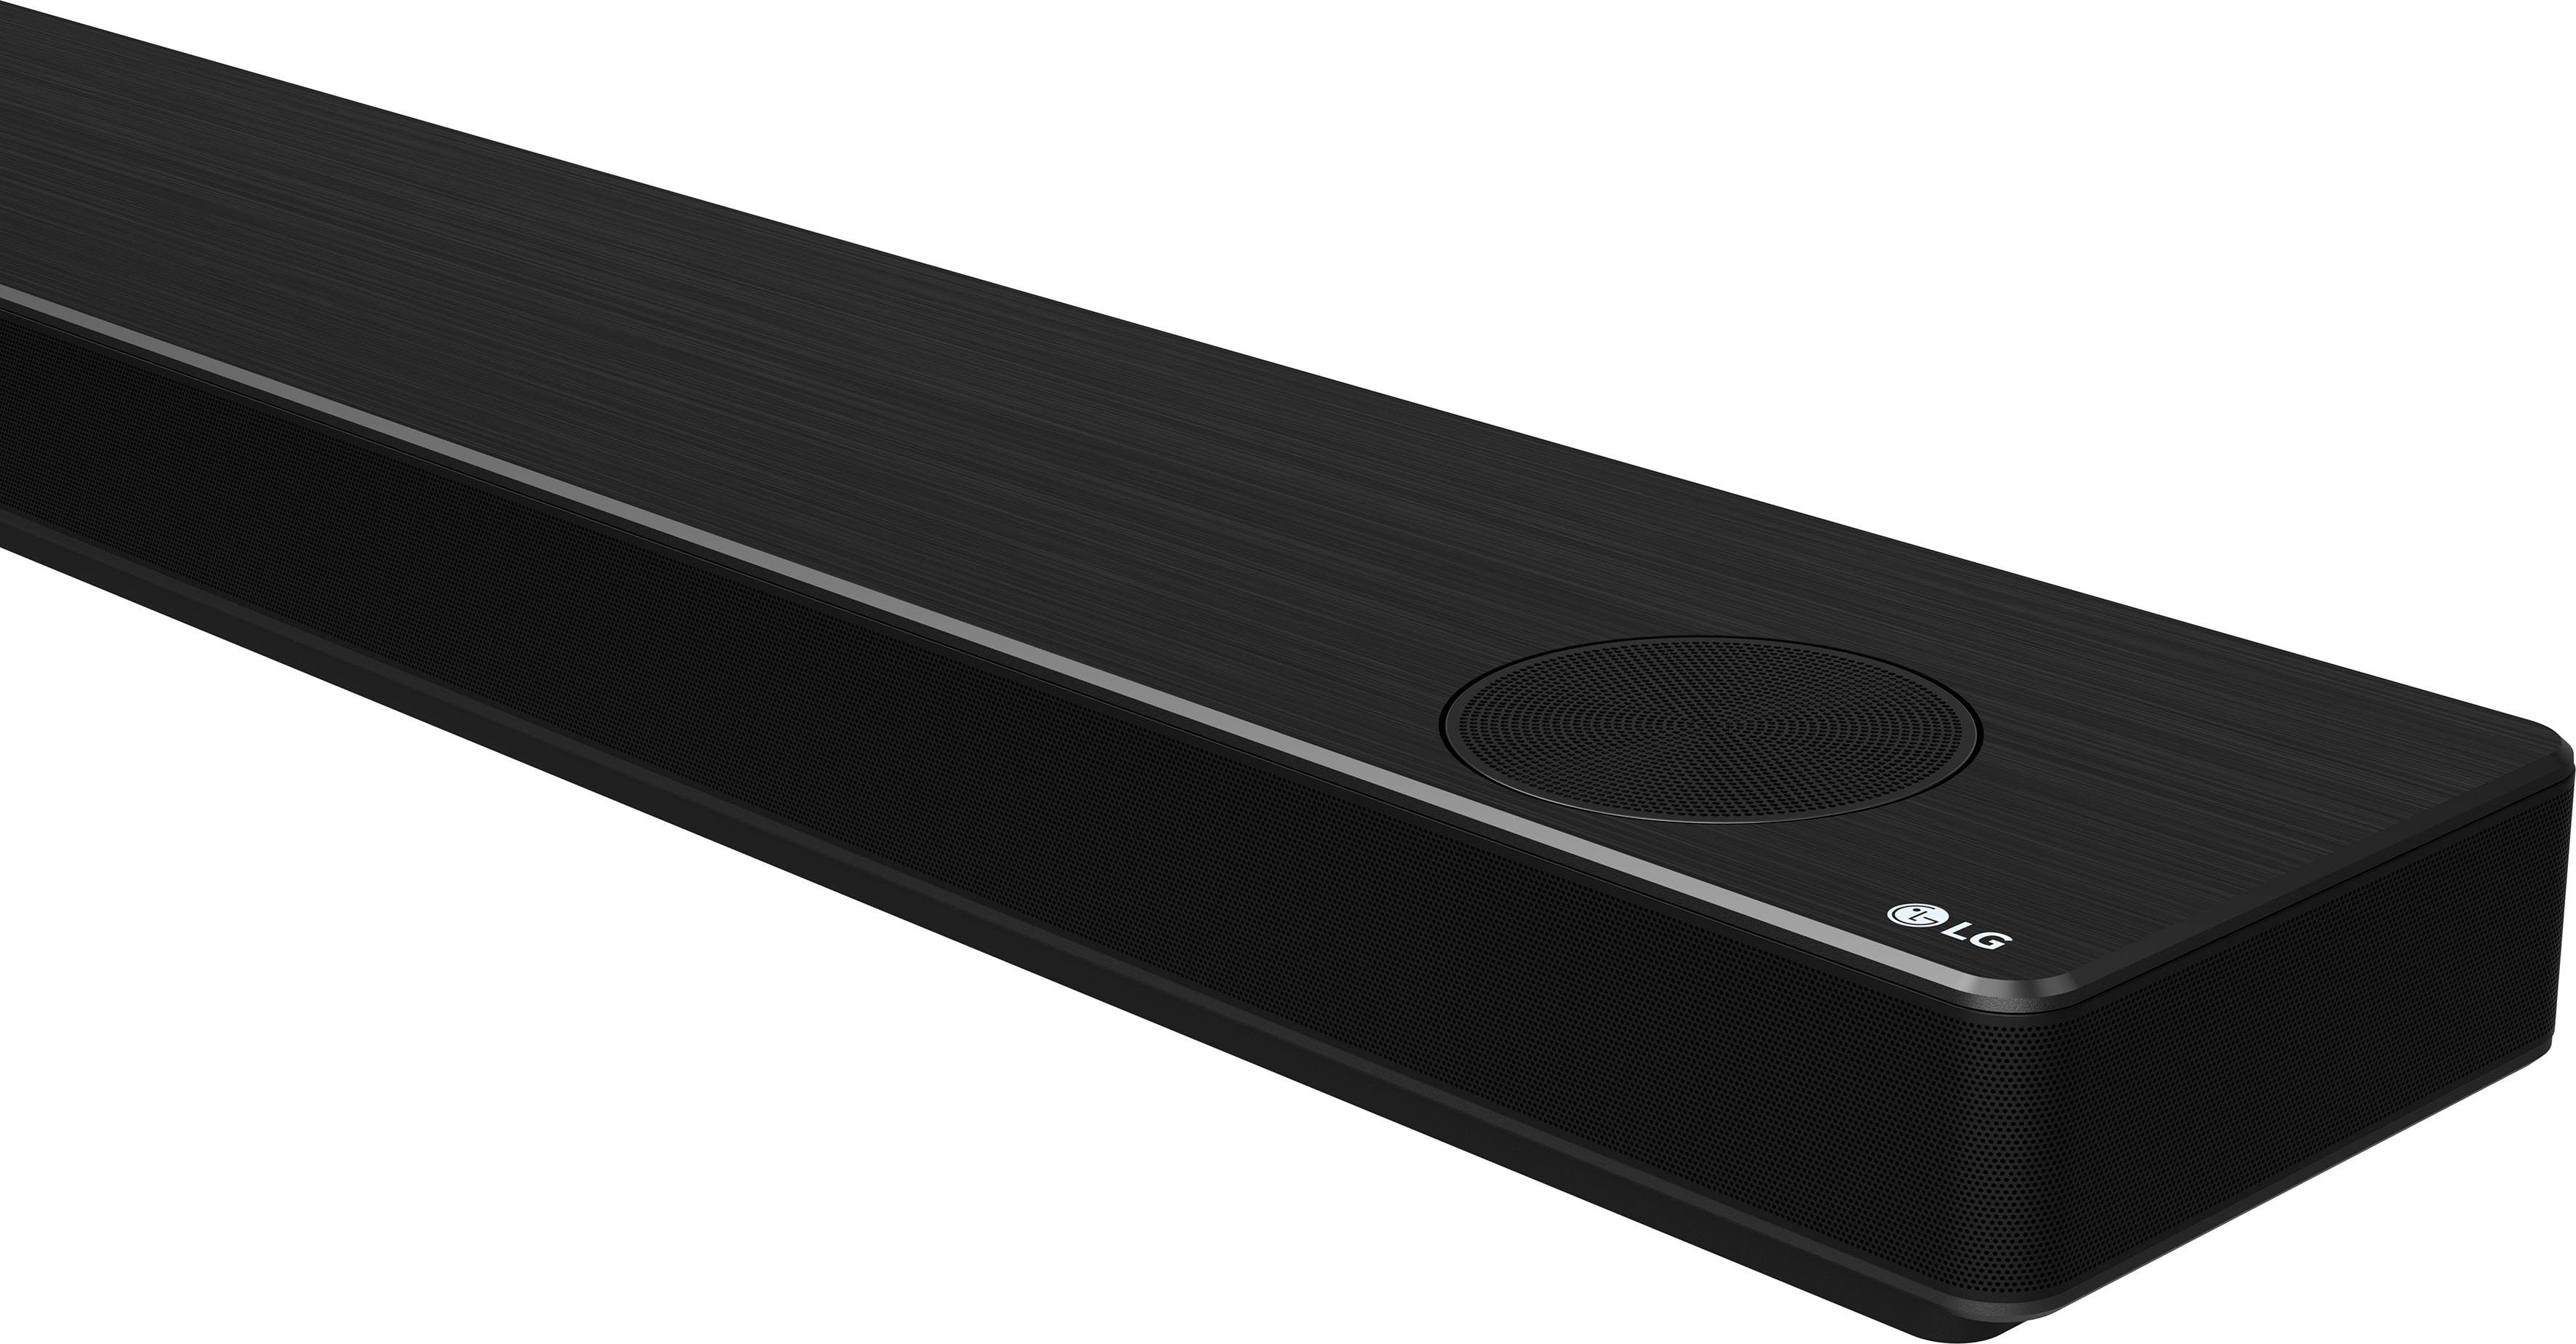 LG DSP11RA 7.1.4 Soundbar WLAN, W) 770 (Bluetooth